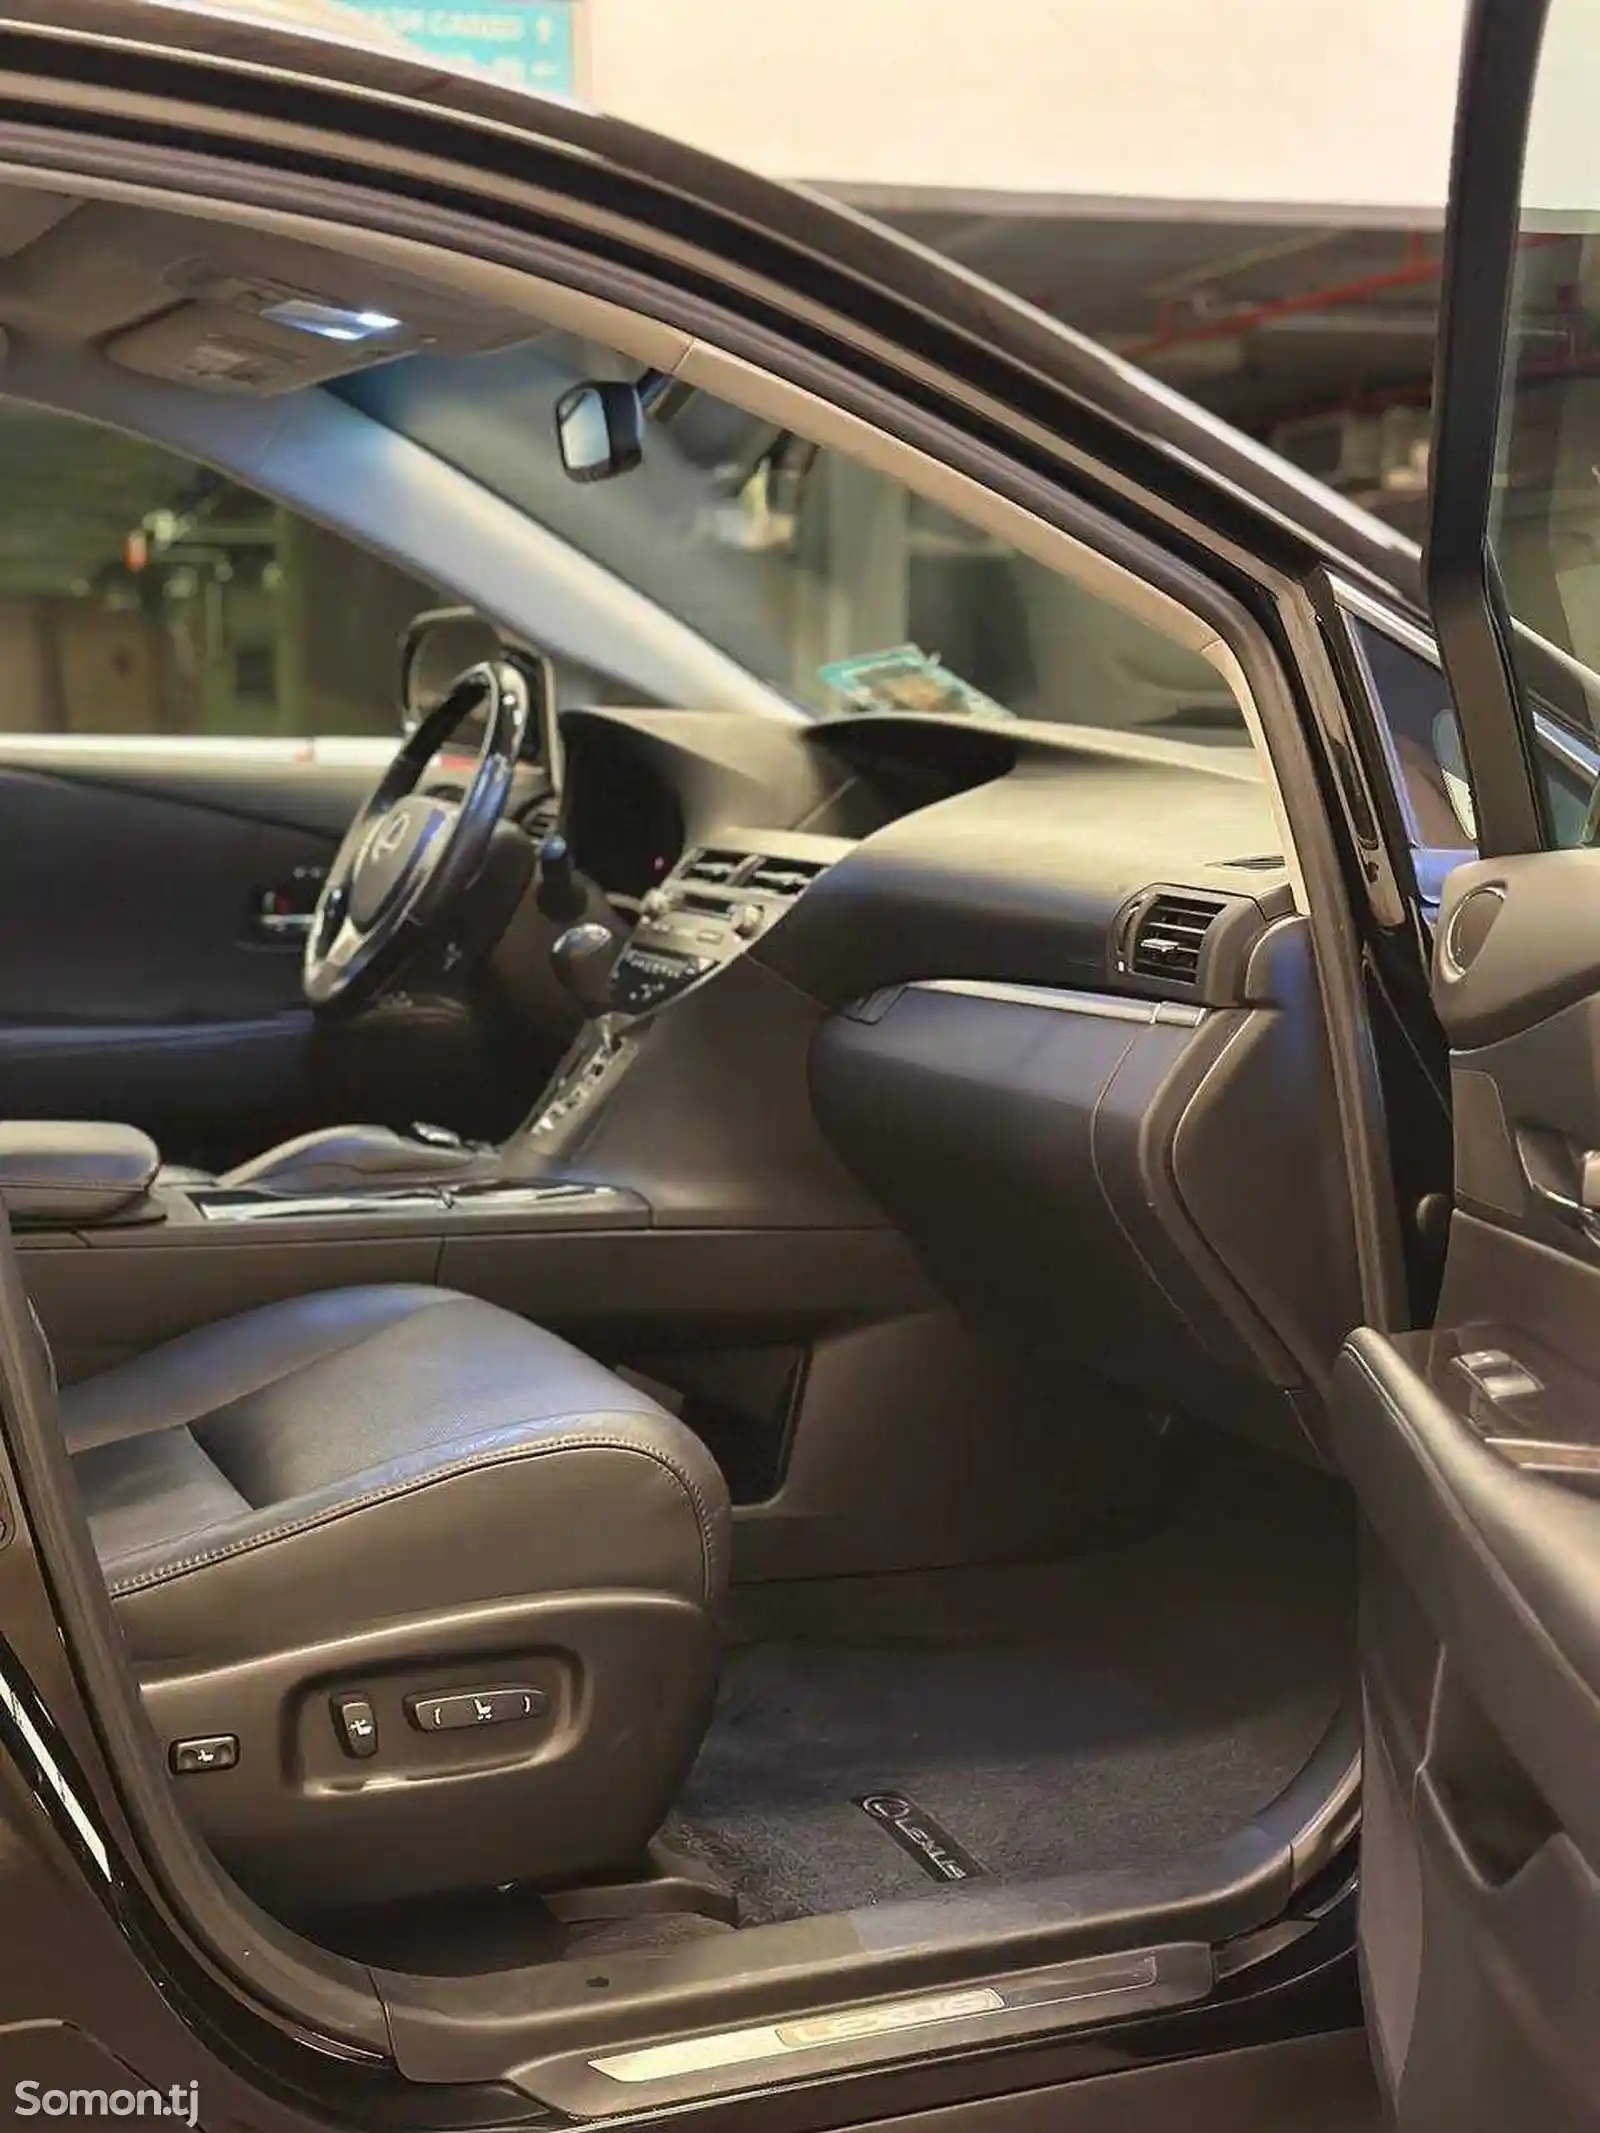 Lexus RX series, 2015-12